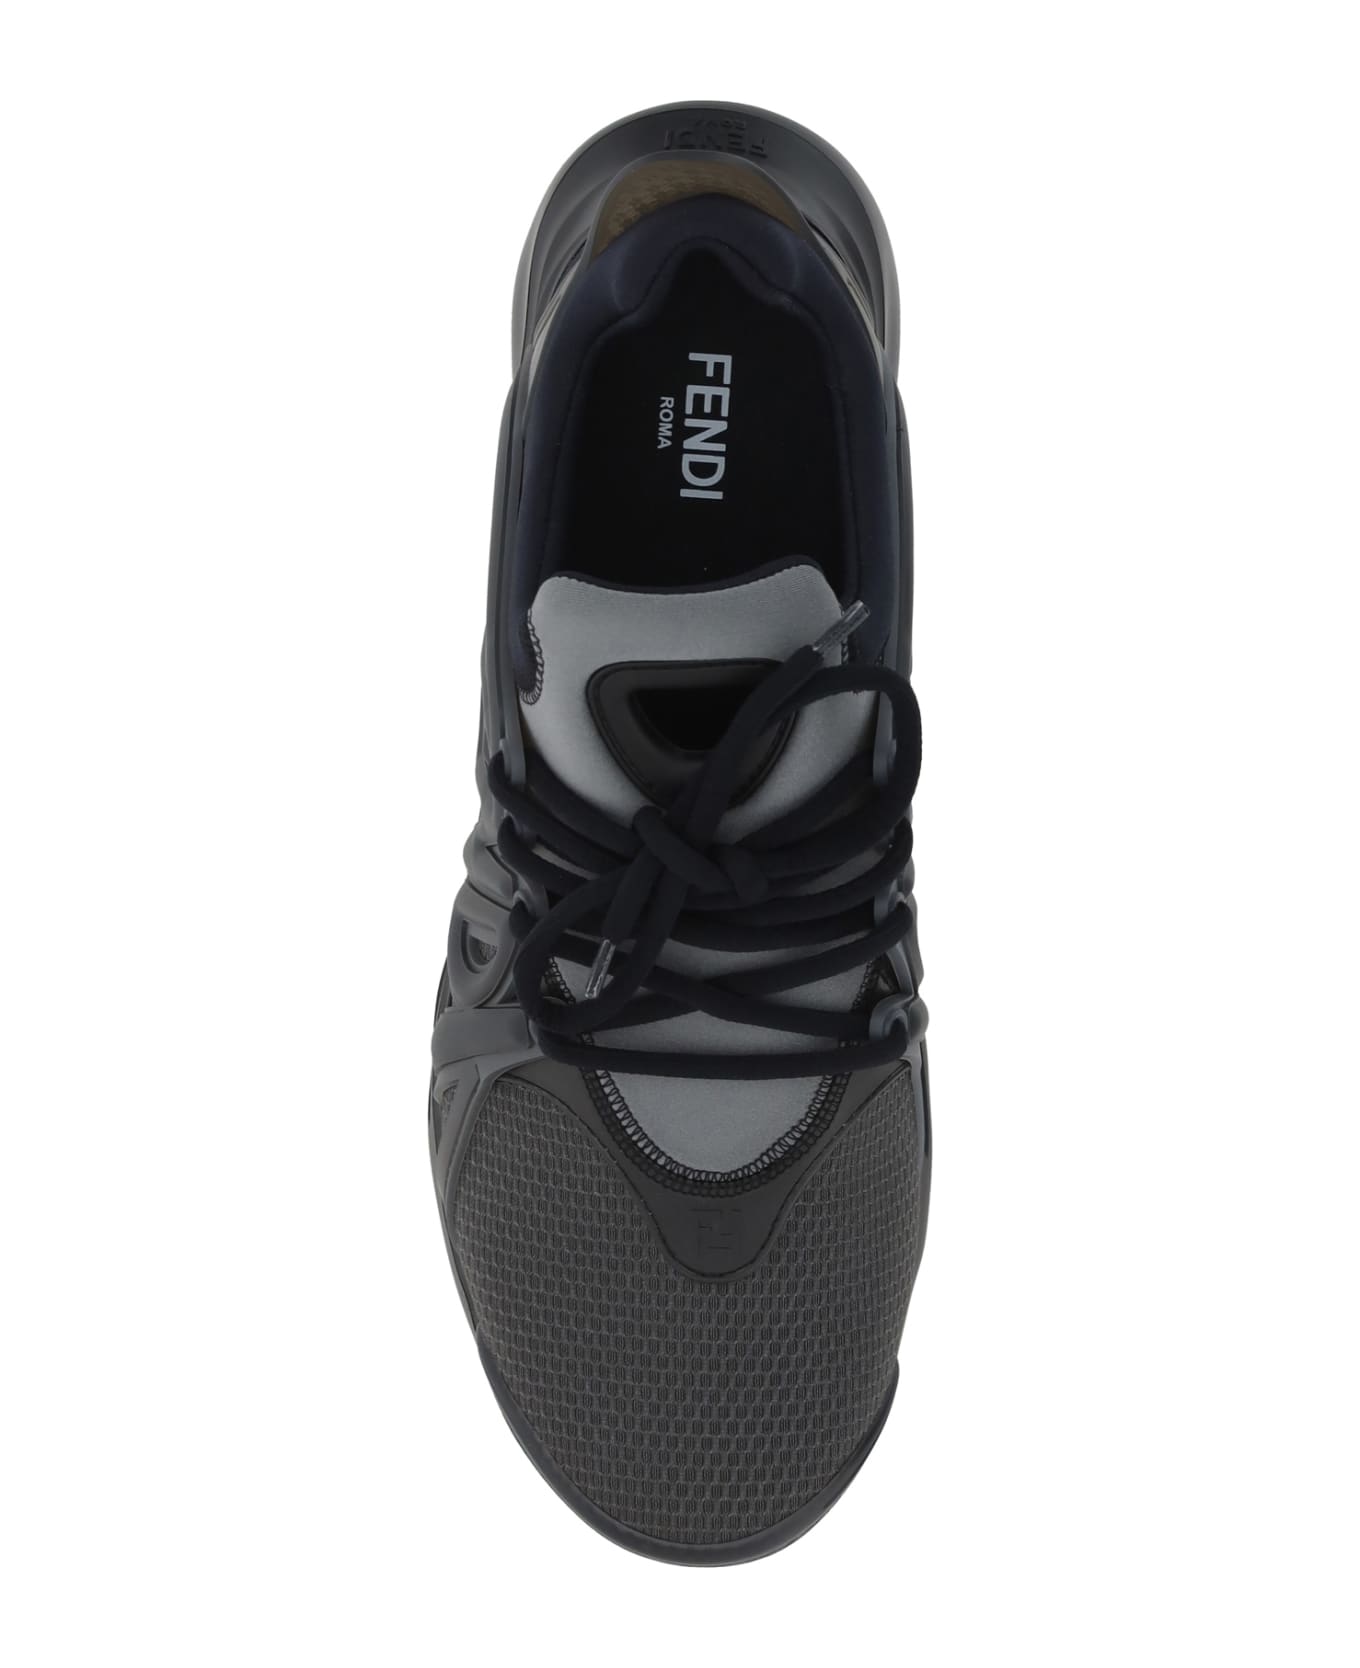 Fendi Sneakers - Antr+grig+argill Ner